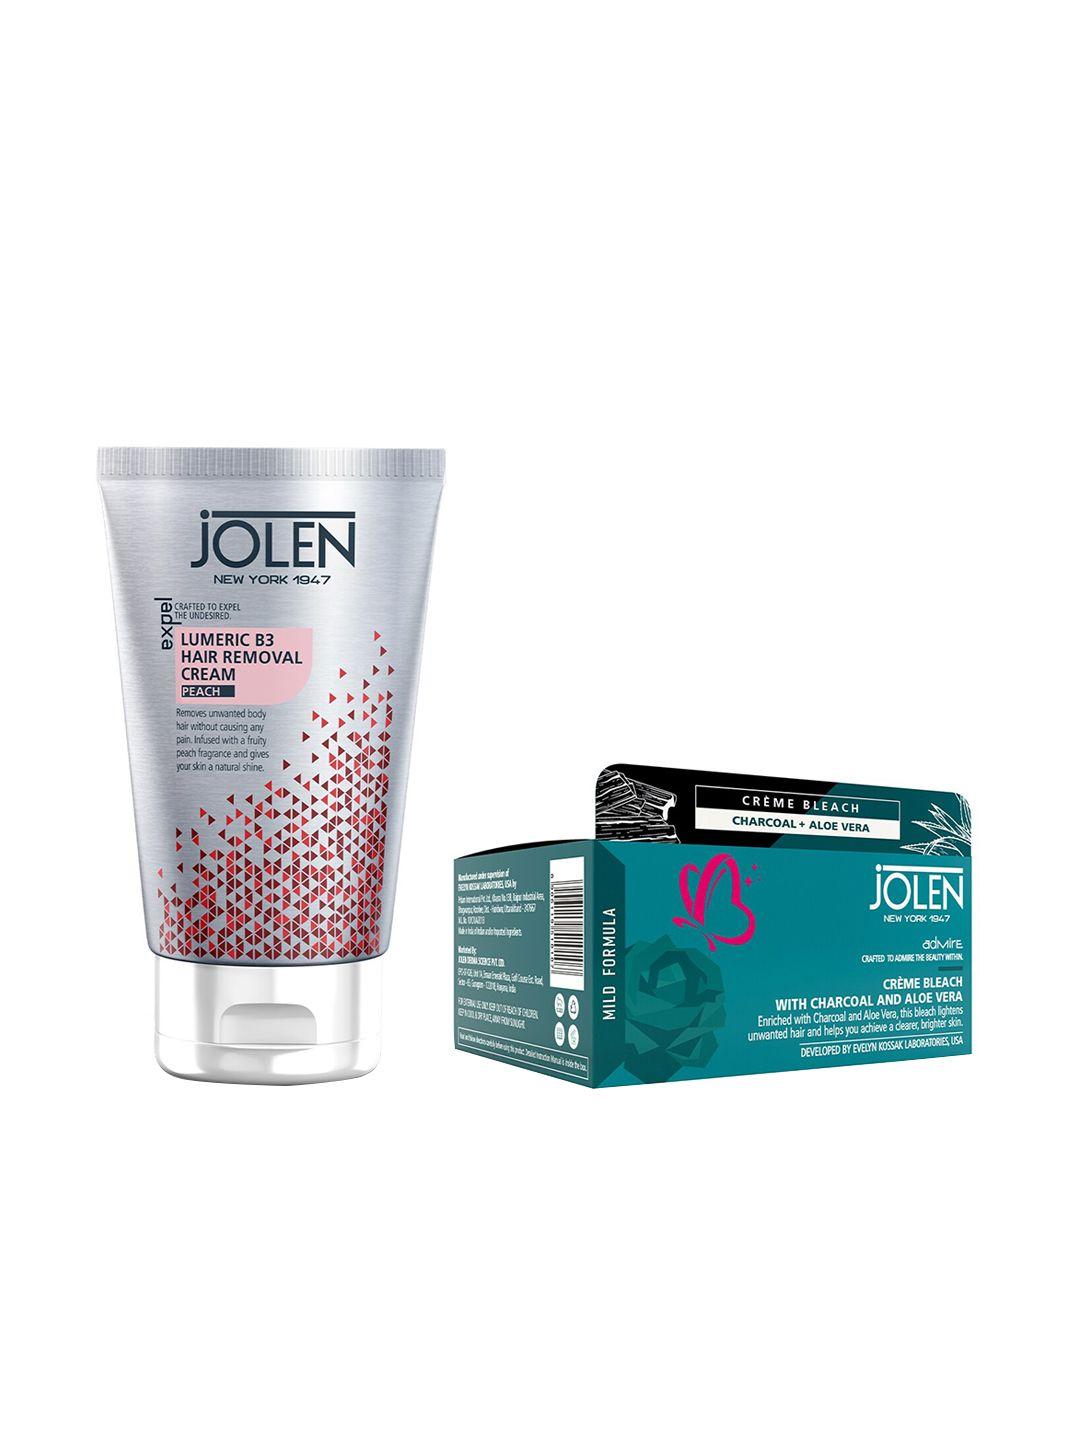 jolen new york lumeric b3 hair removal cream & crme bleach with charcoal 90g